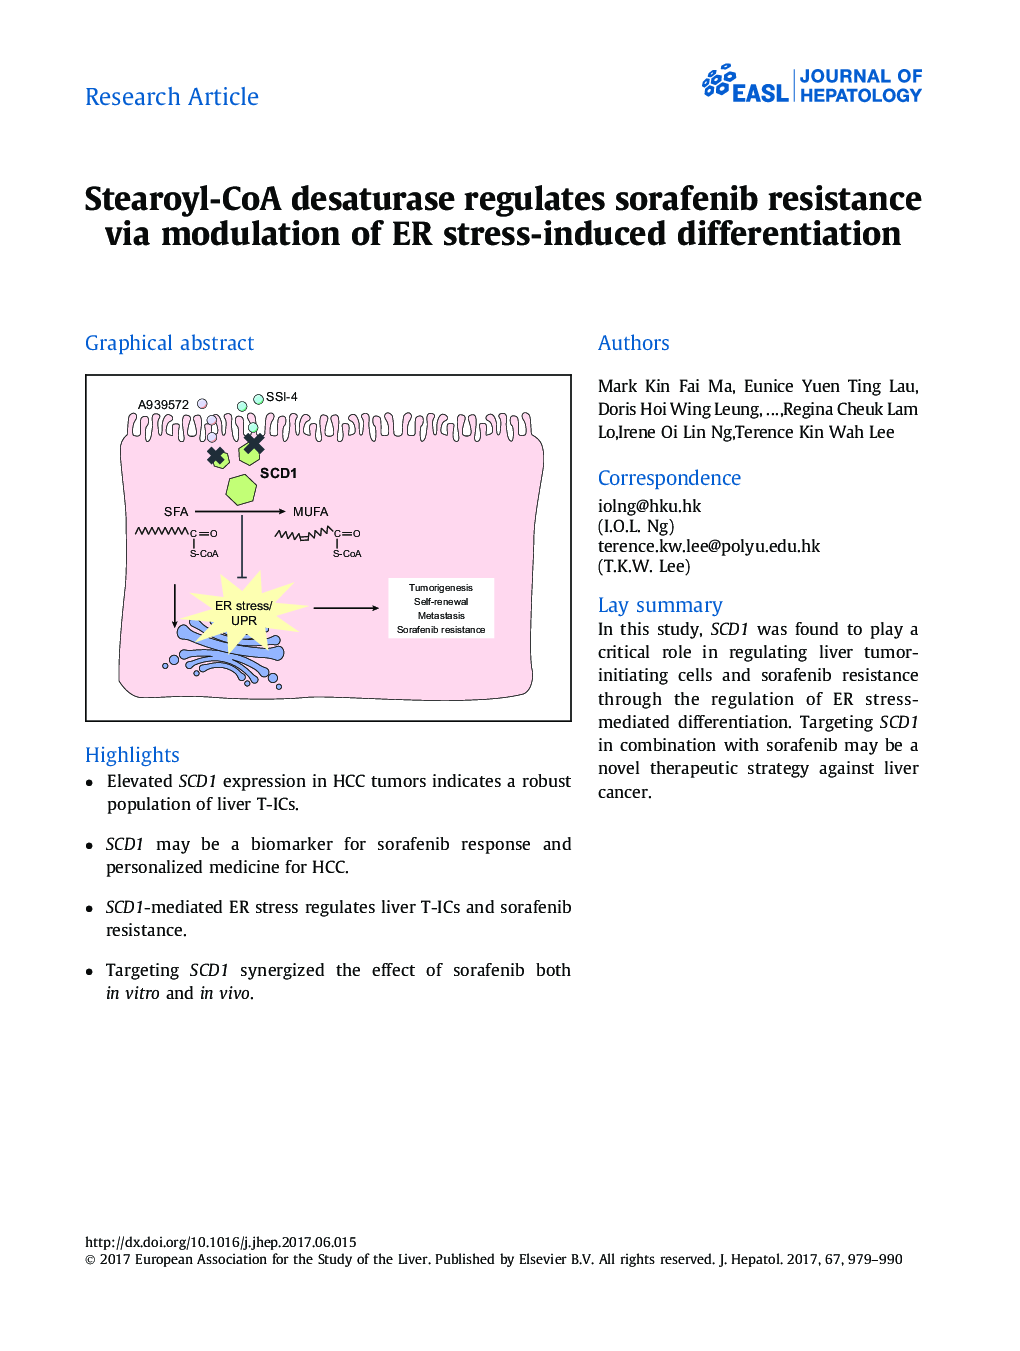 Stearoyl-CoA desaturase regulates sorafenib resistance via modulation of ER stress-induced differentiation